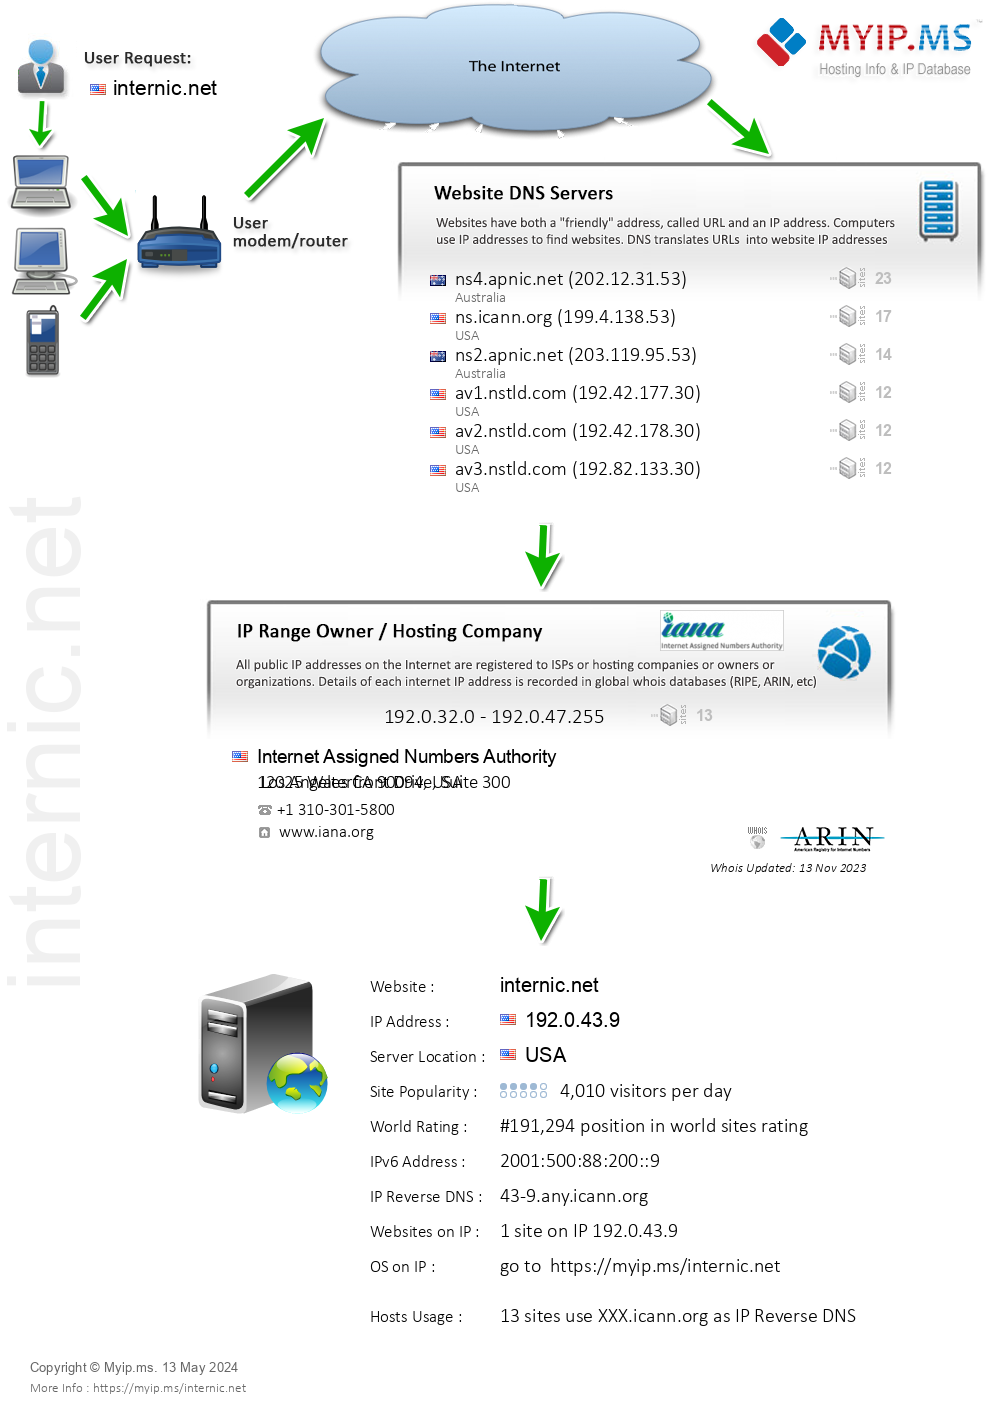 Internic.net - Website Hosting Visual IP Diagram